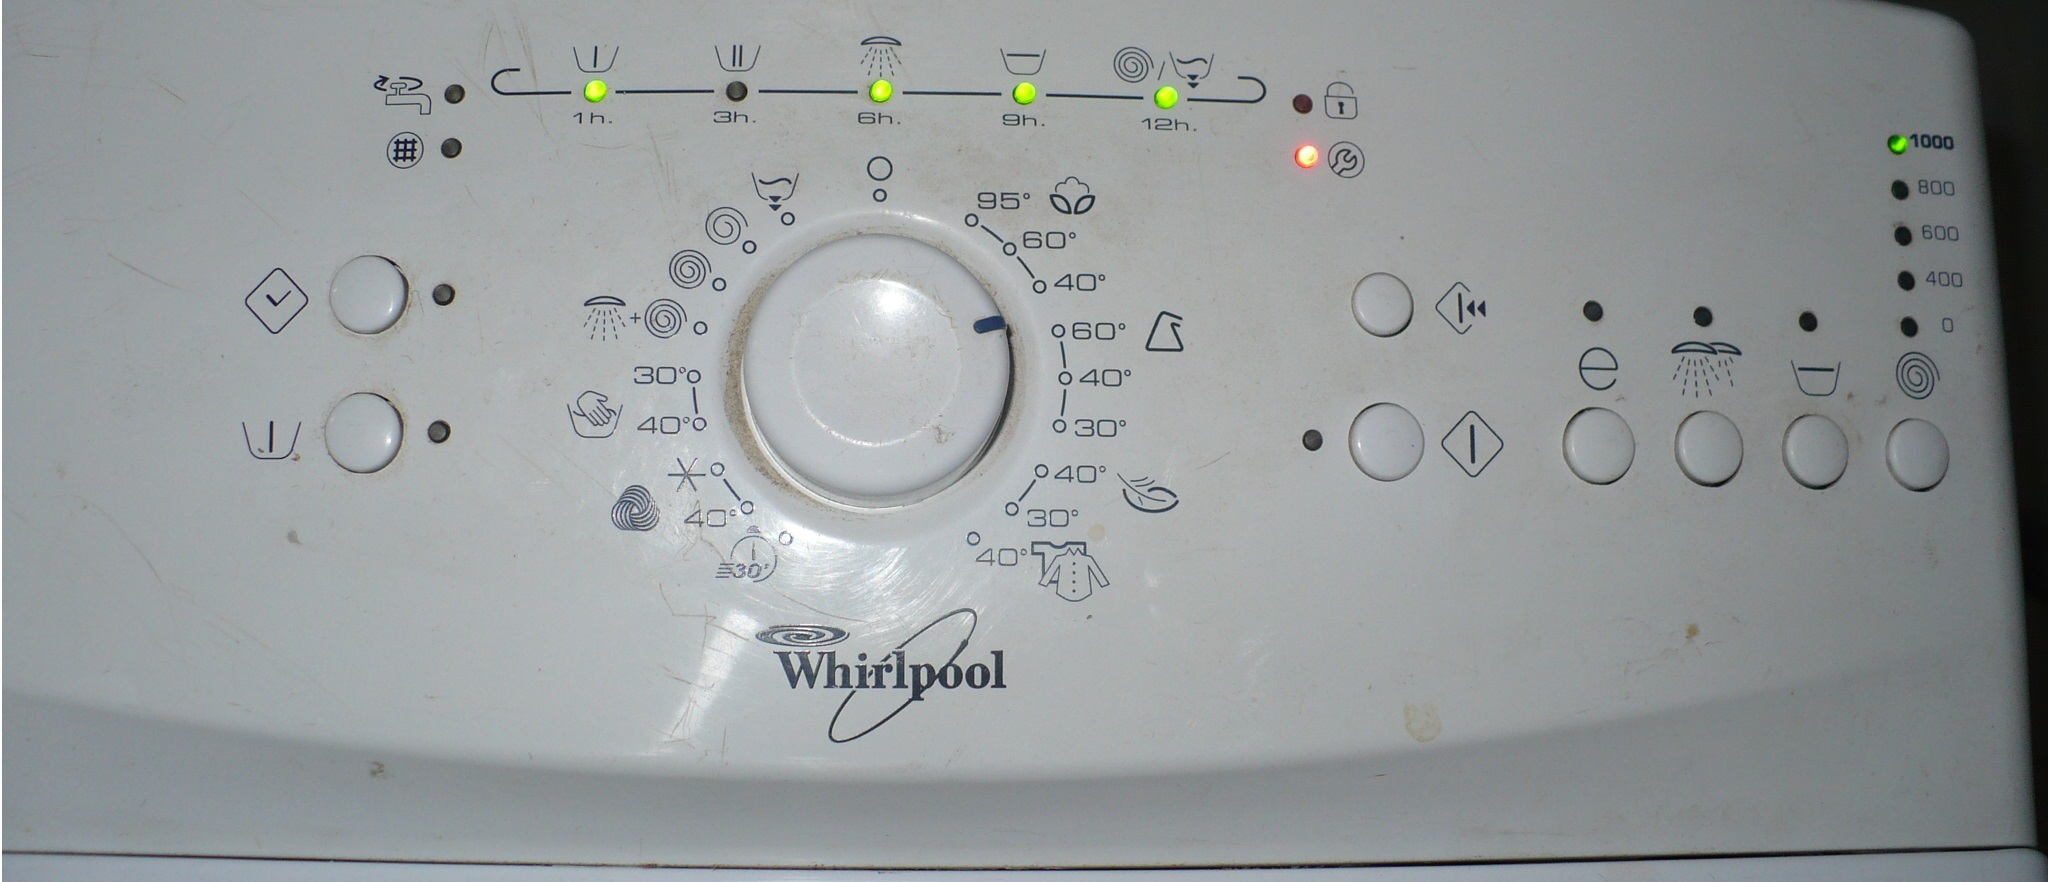 Programas auxiliares Whirlpool